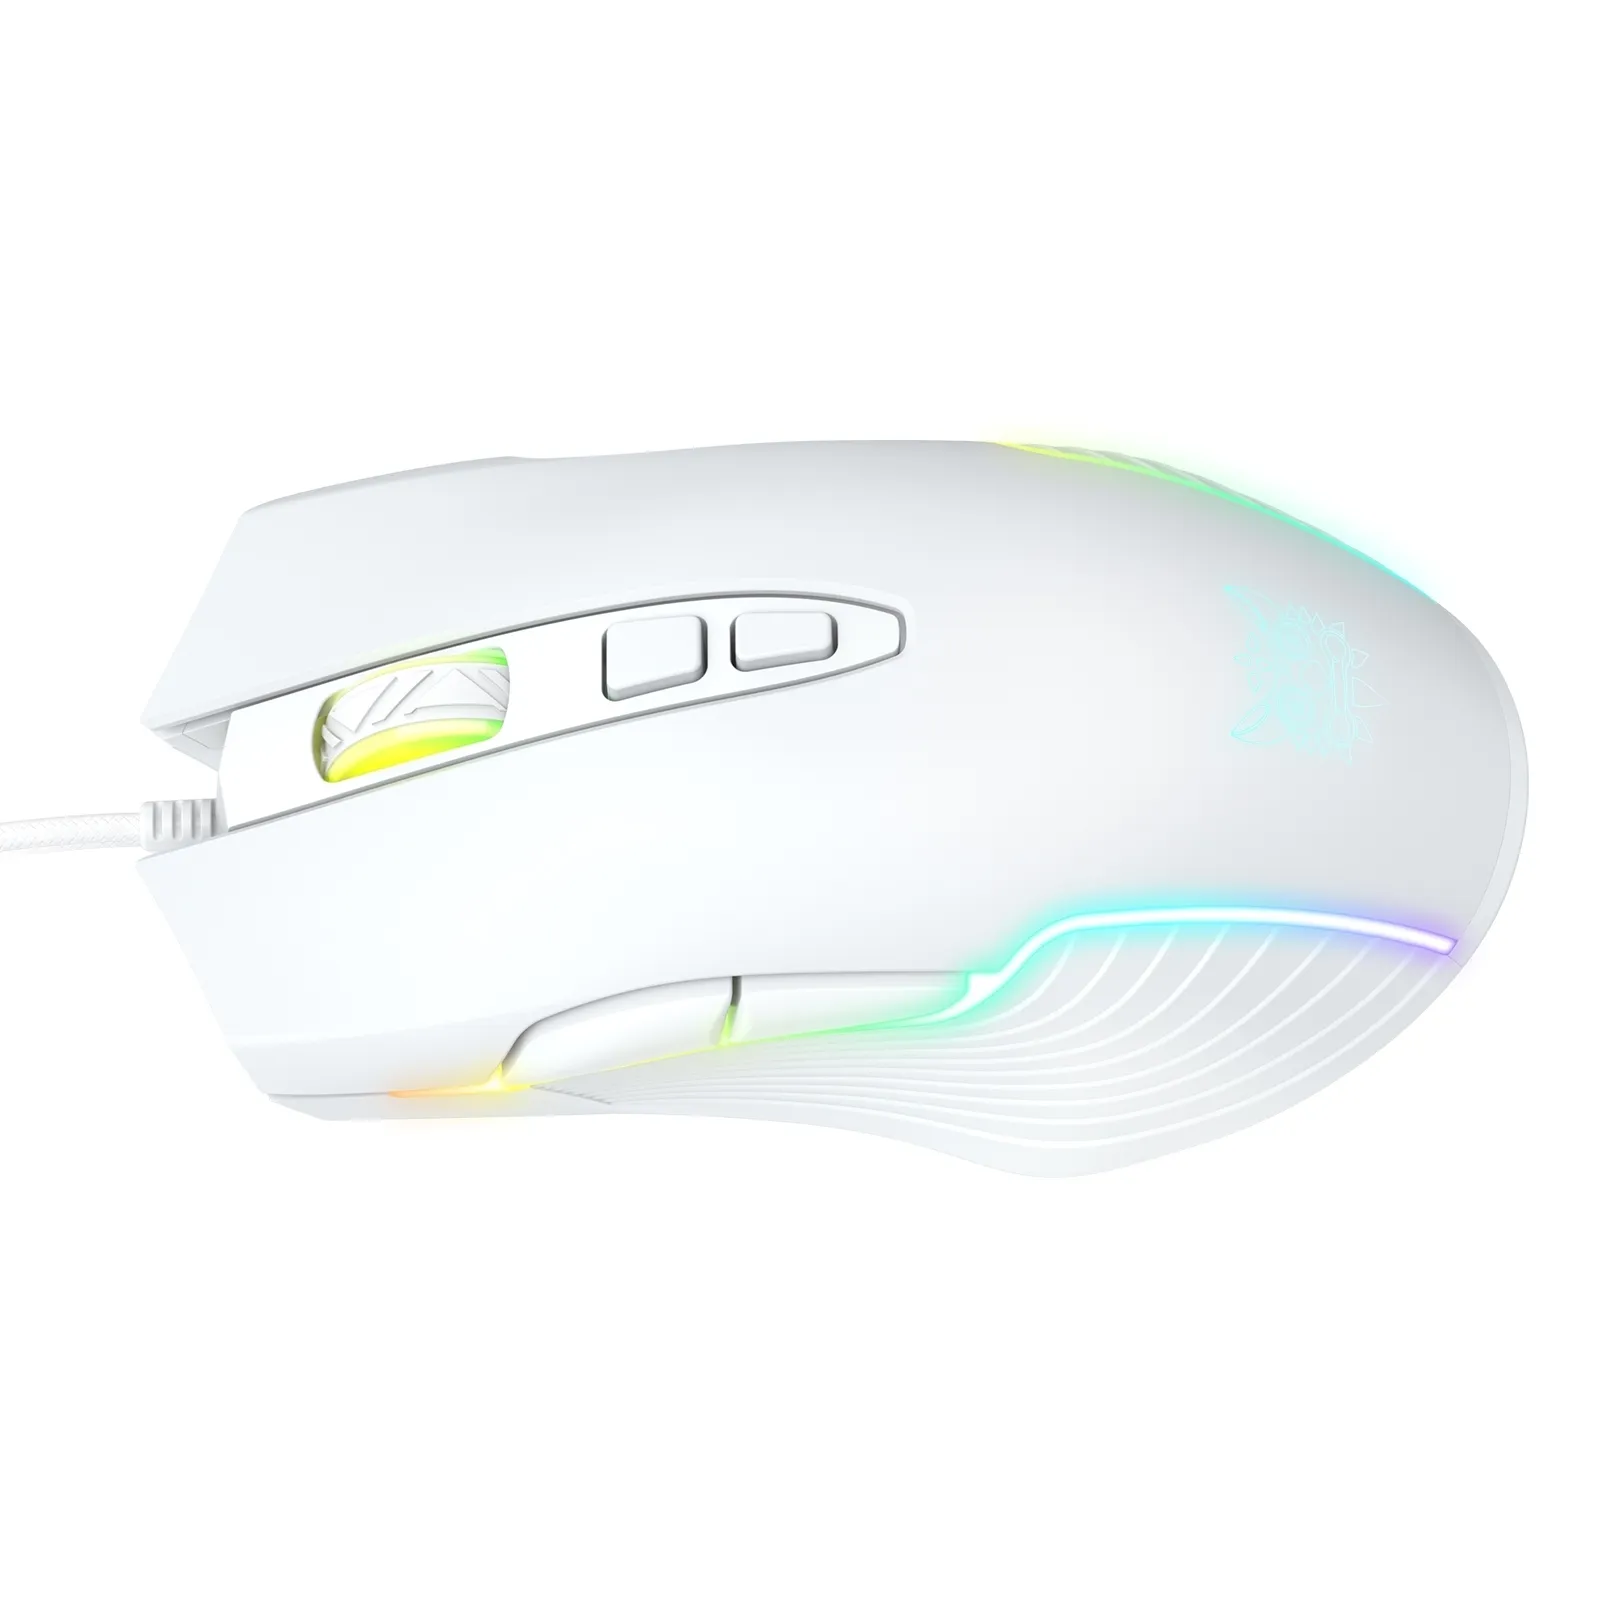 Onikuma Cw905 Branco Simples Com Fio Mouse Gaming 3600 Dpi Usb Mouse Com Fio Mouse De Computador 1200 Dpi Com Luz Led Rgb